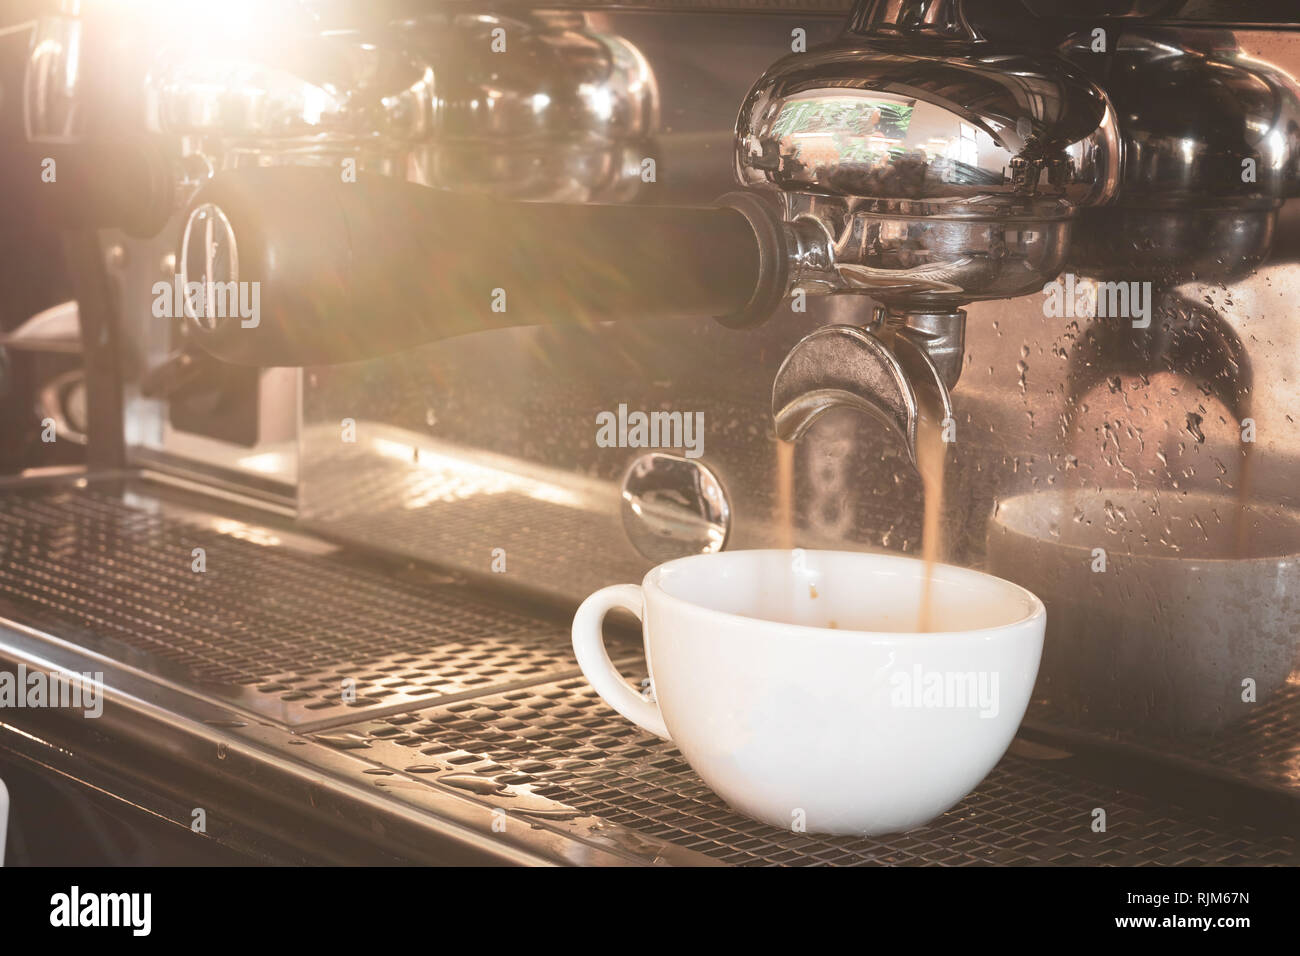 https://c8.alamy.com/comp/RJM67N/coffee-machine-preparing-fresh-coffee-in-white-cup-RJM67N.jpg